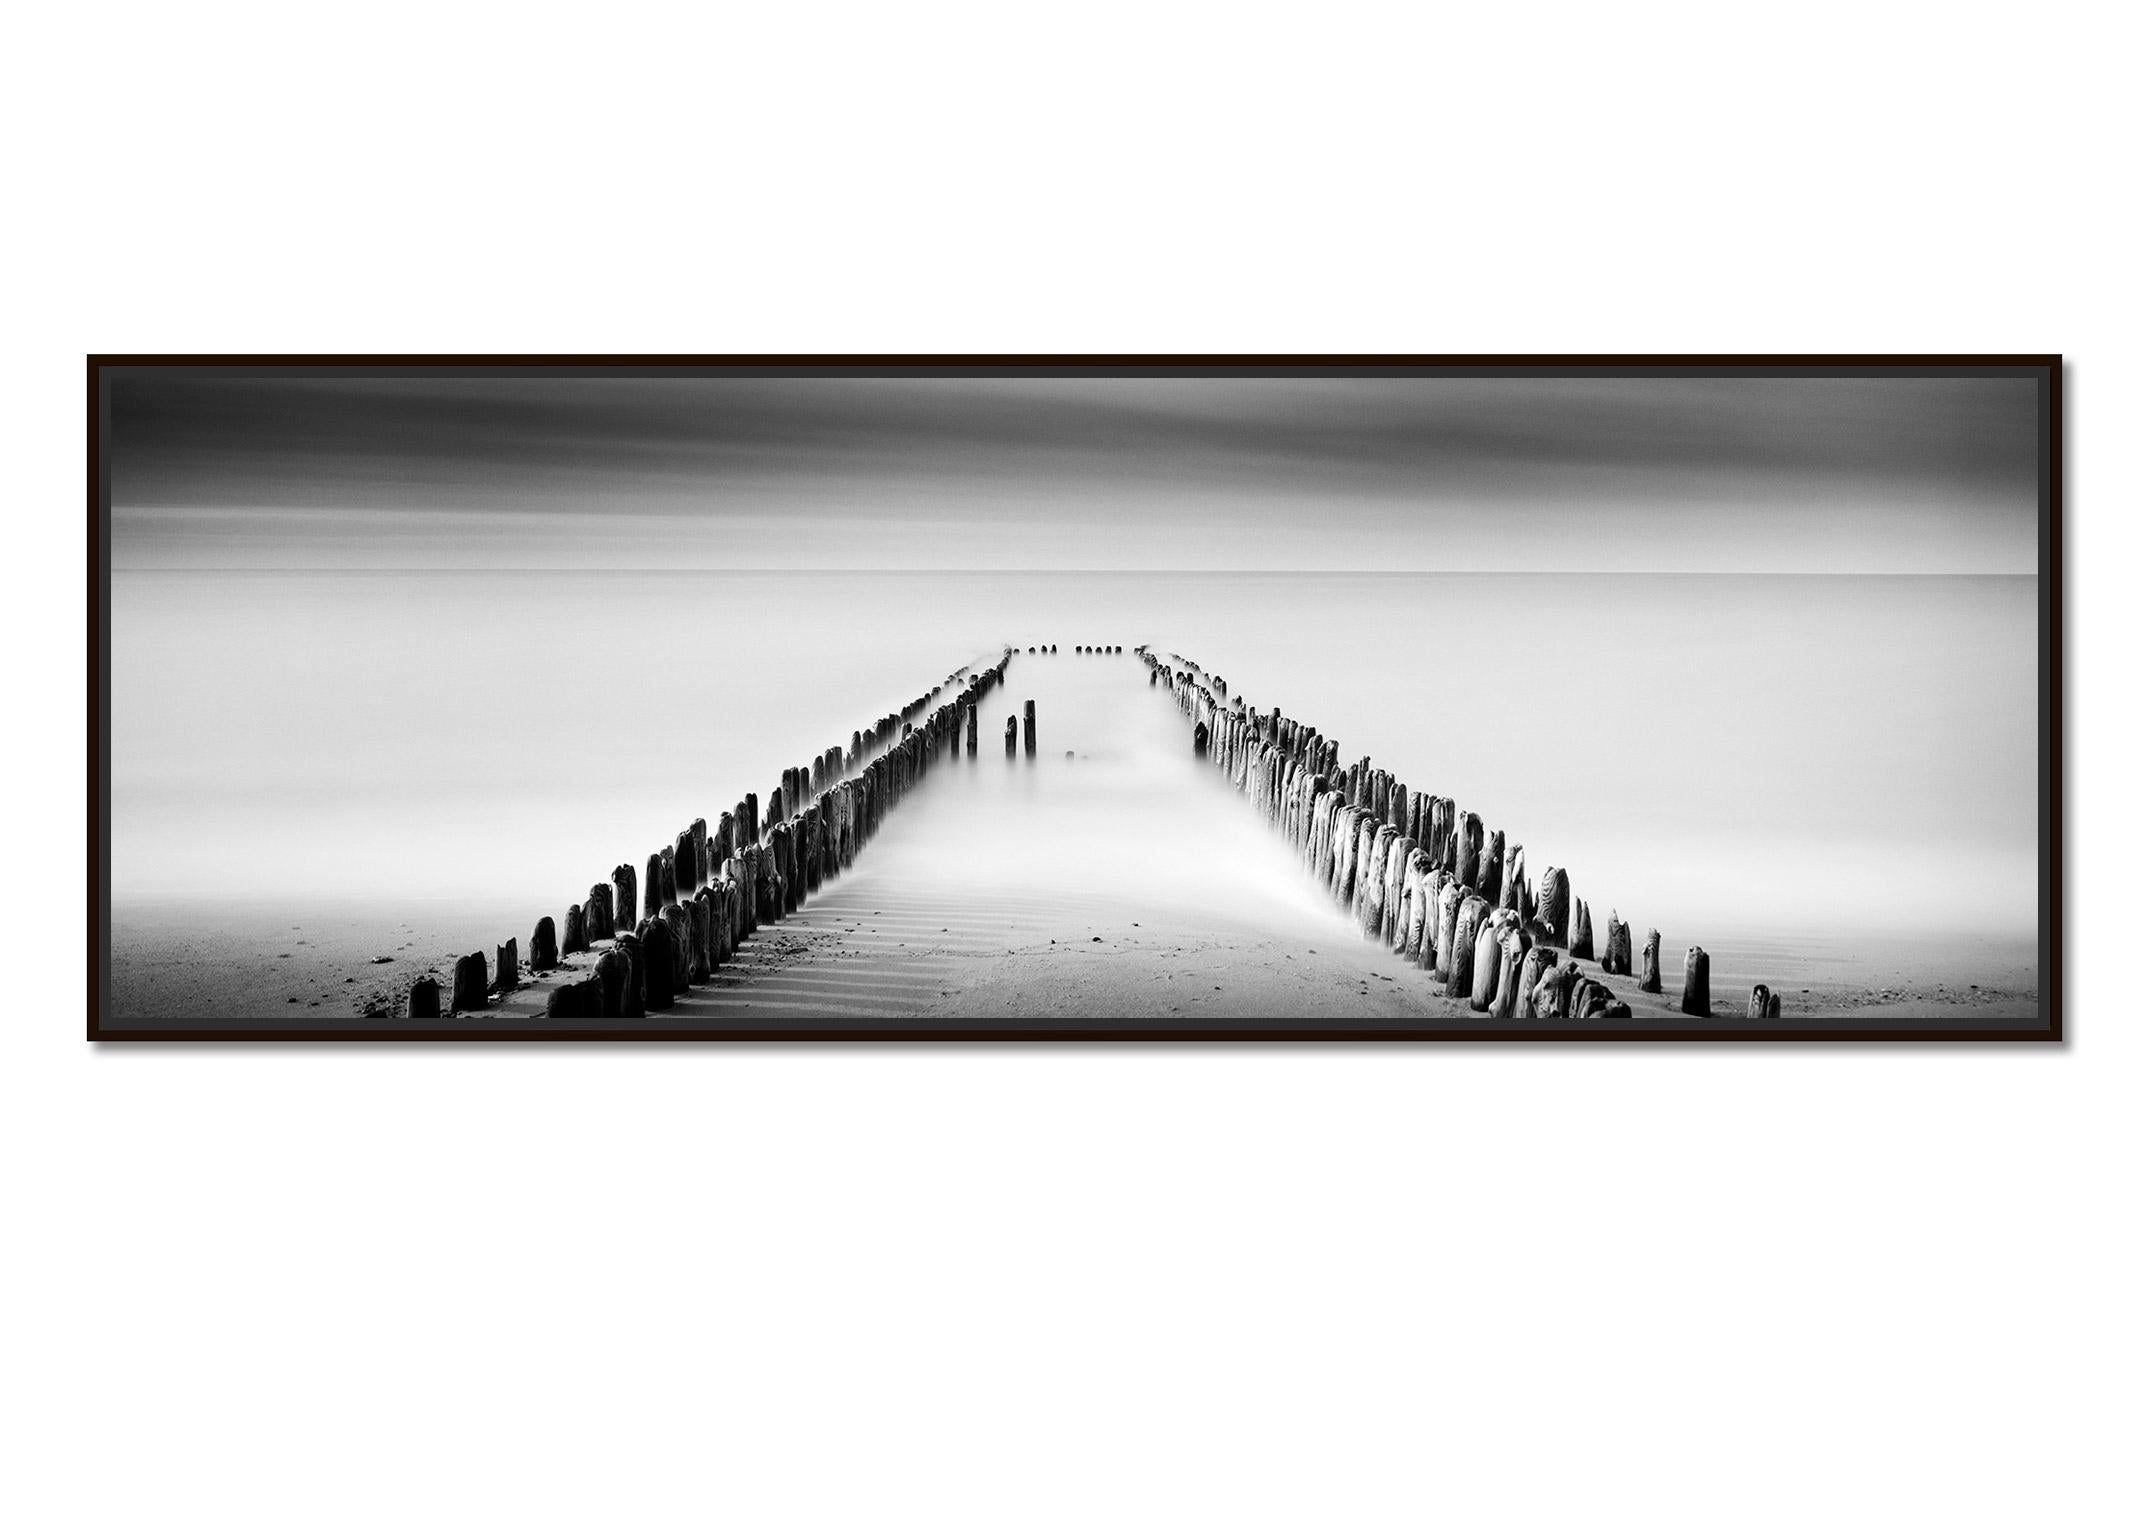 Four Lines, wavebreaker, black & white fine art minimalism landscape photography - Photograph by Gerald Berghammer